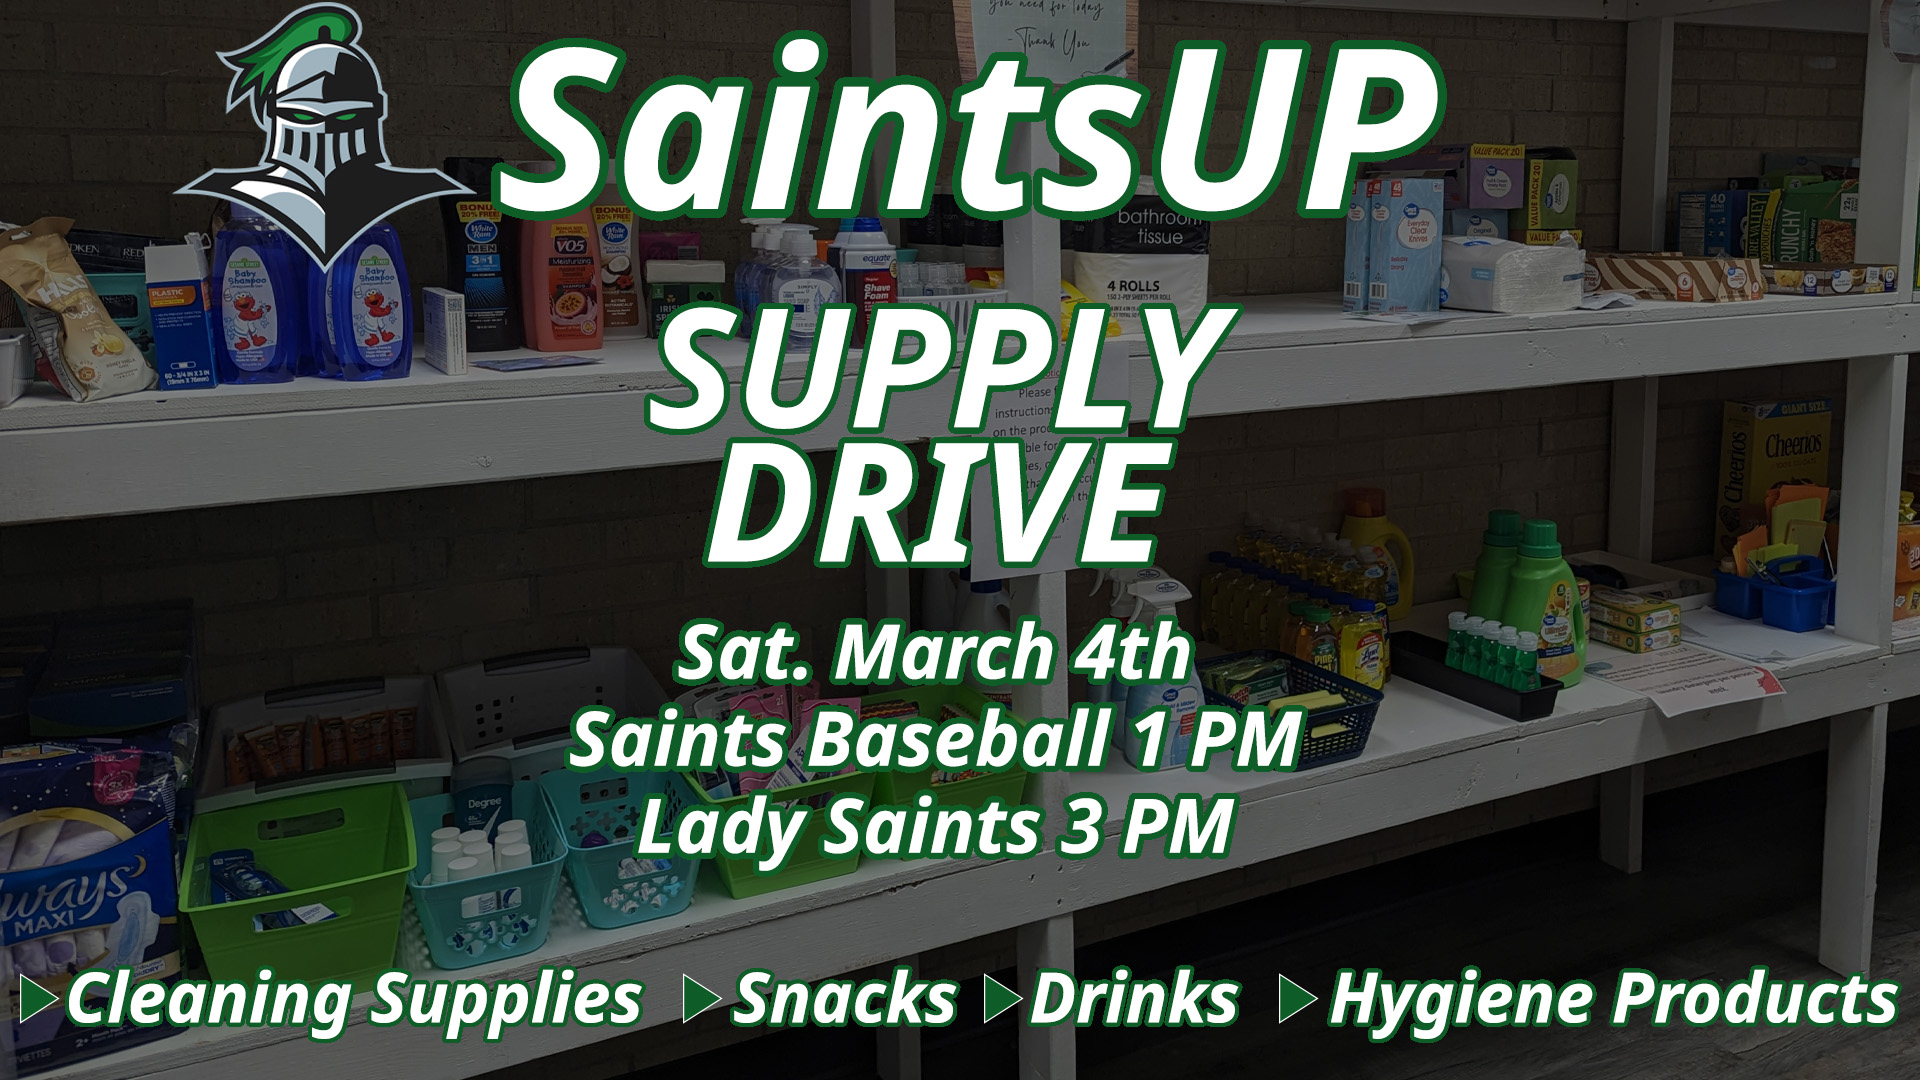 SaintsUp Food Pantry Drive on Saturday